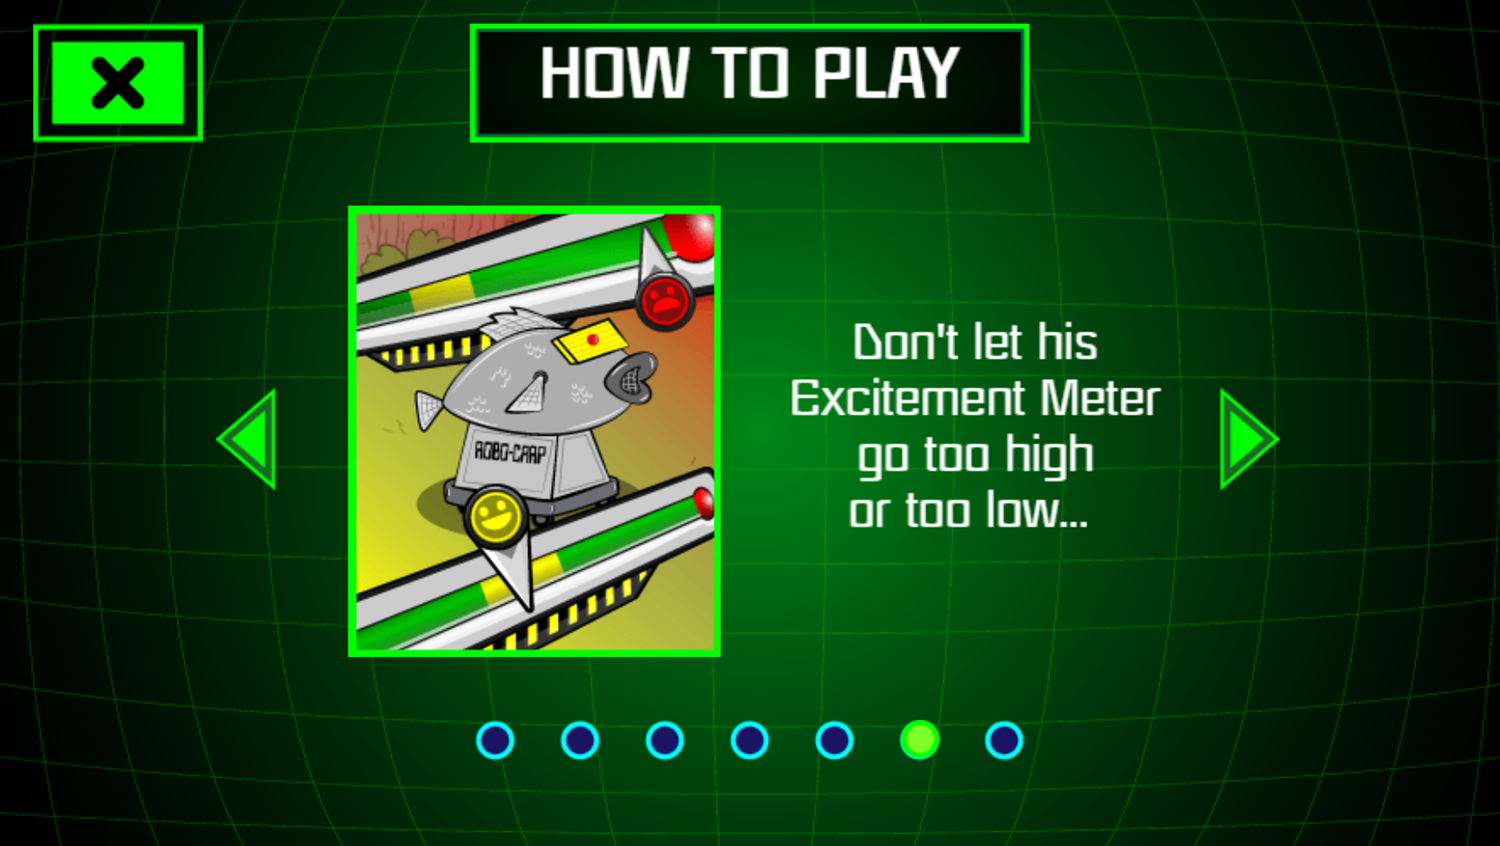 Robo-Carpe Diem Game Play Tips Screenshot.